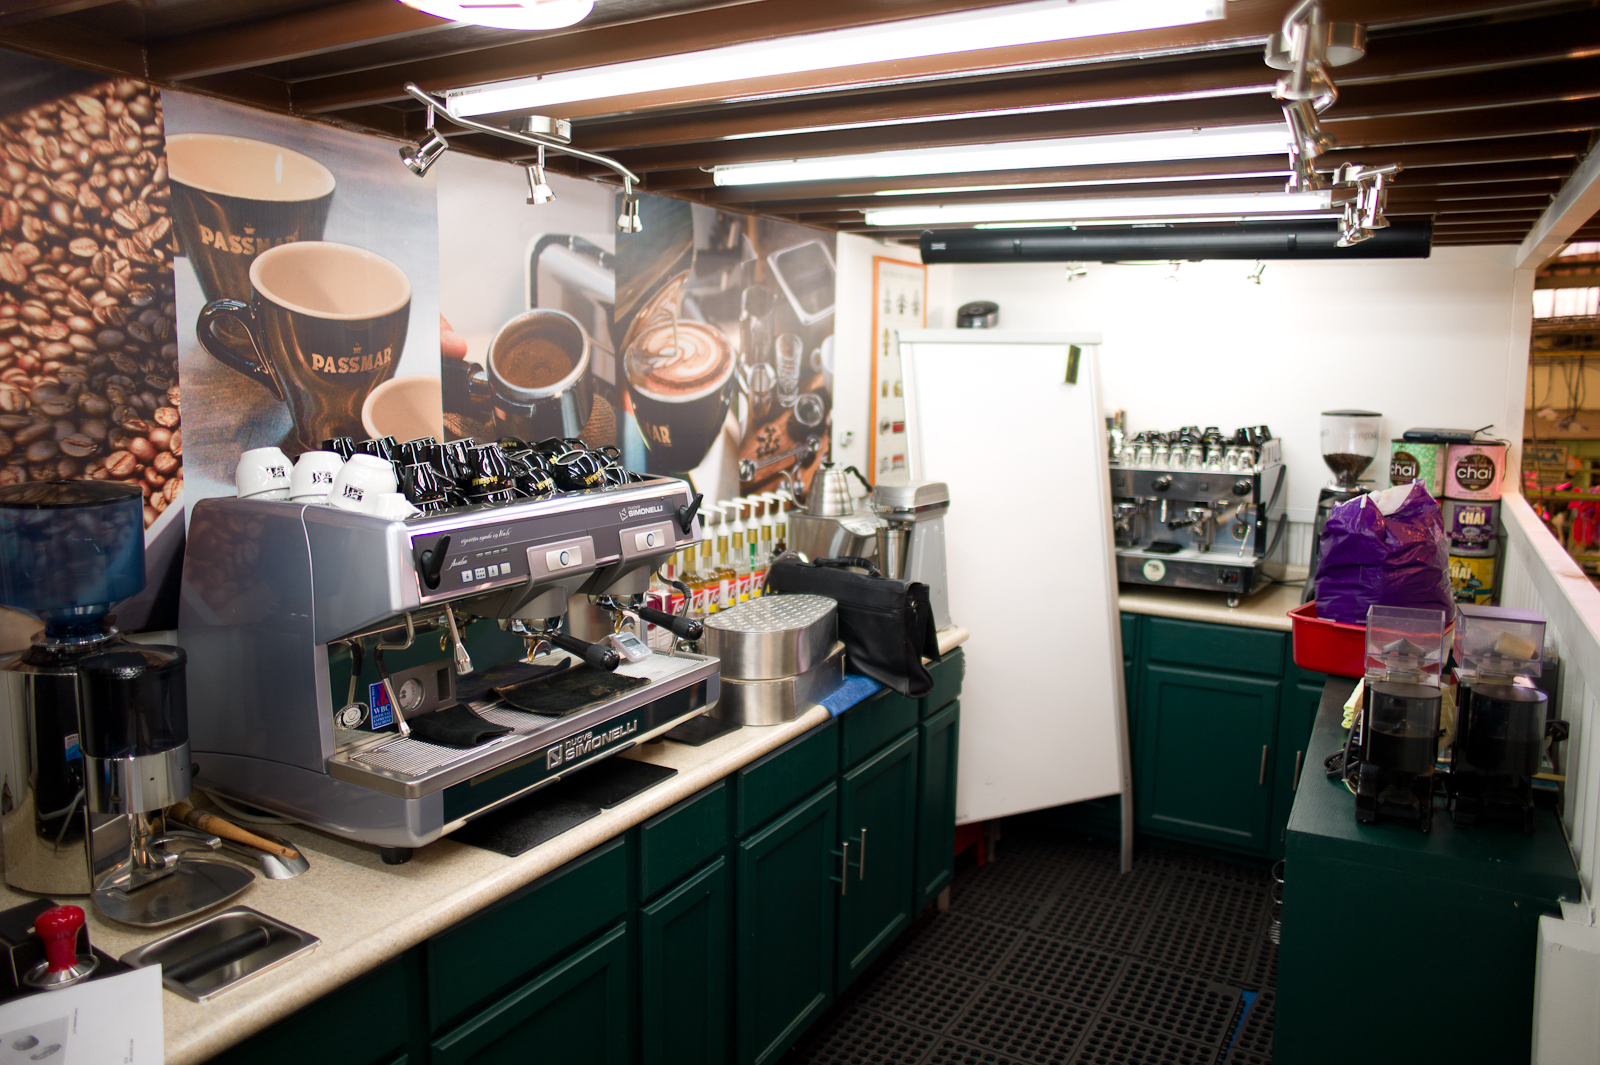 Inside the Coffee lab at Café Passmar